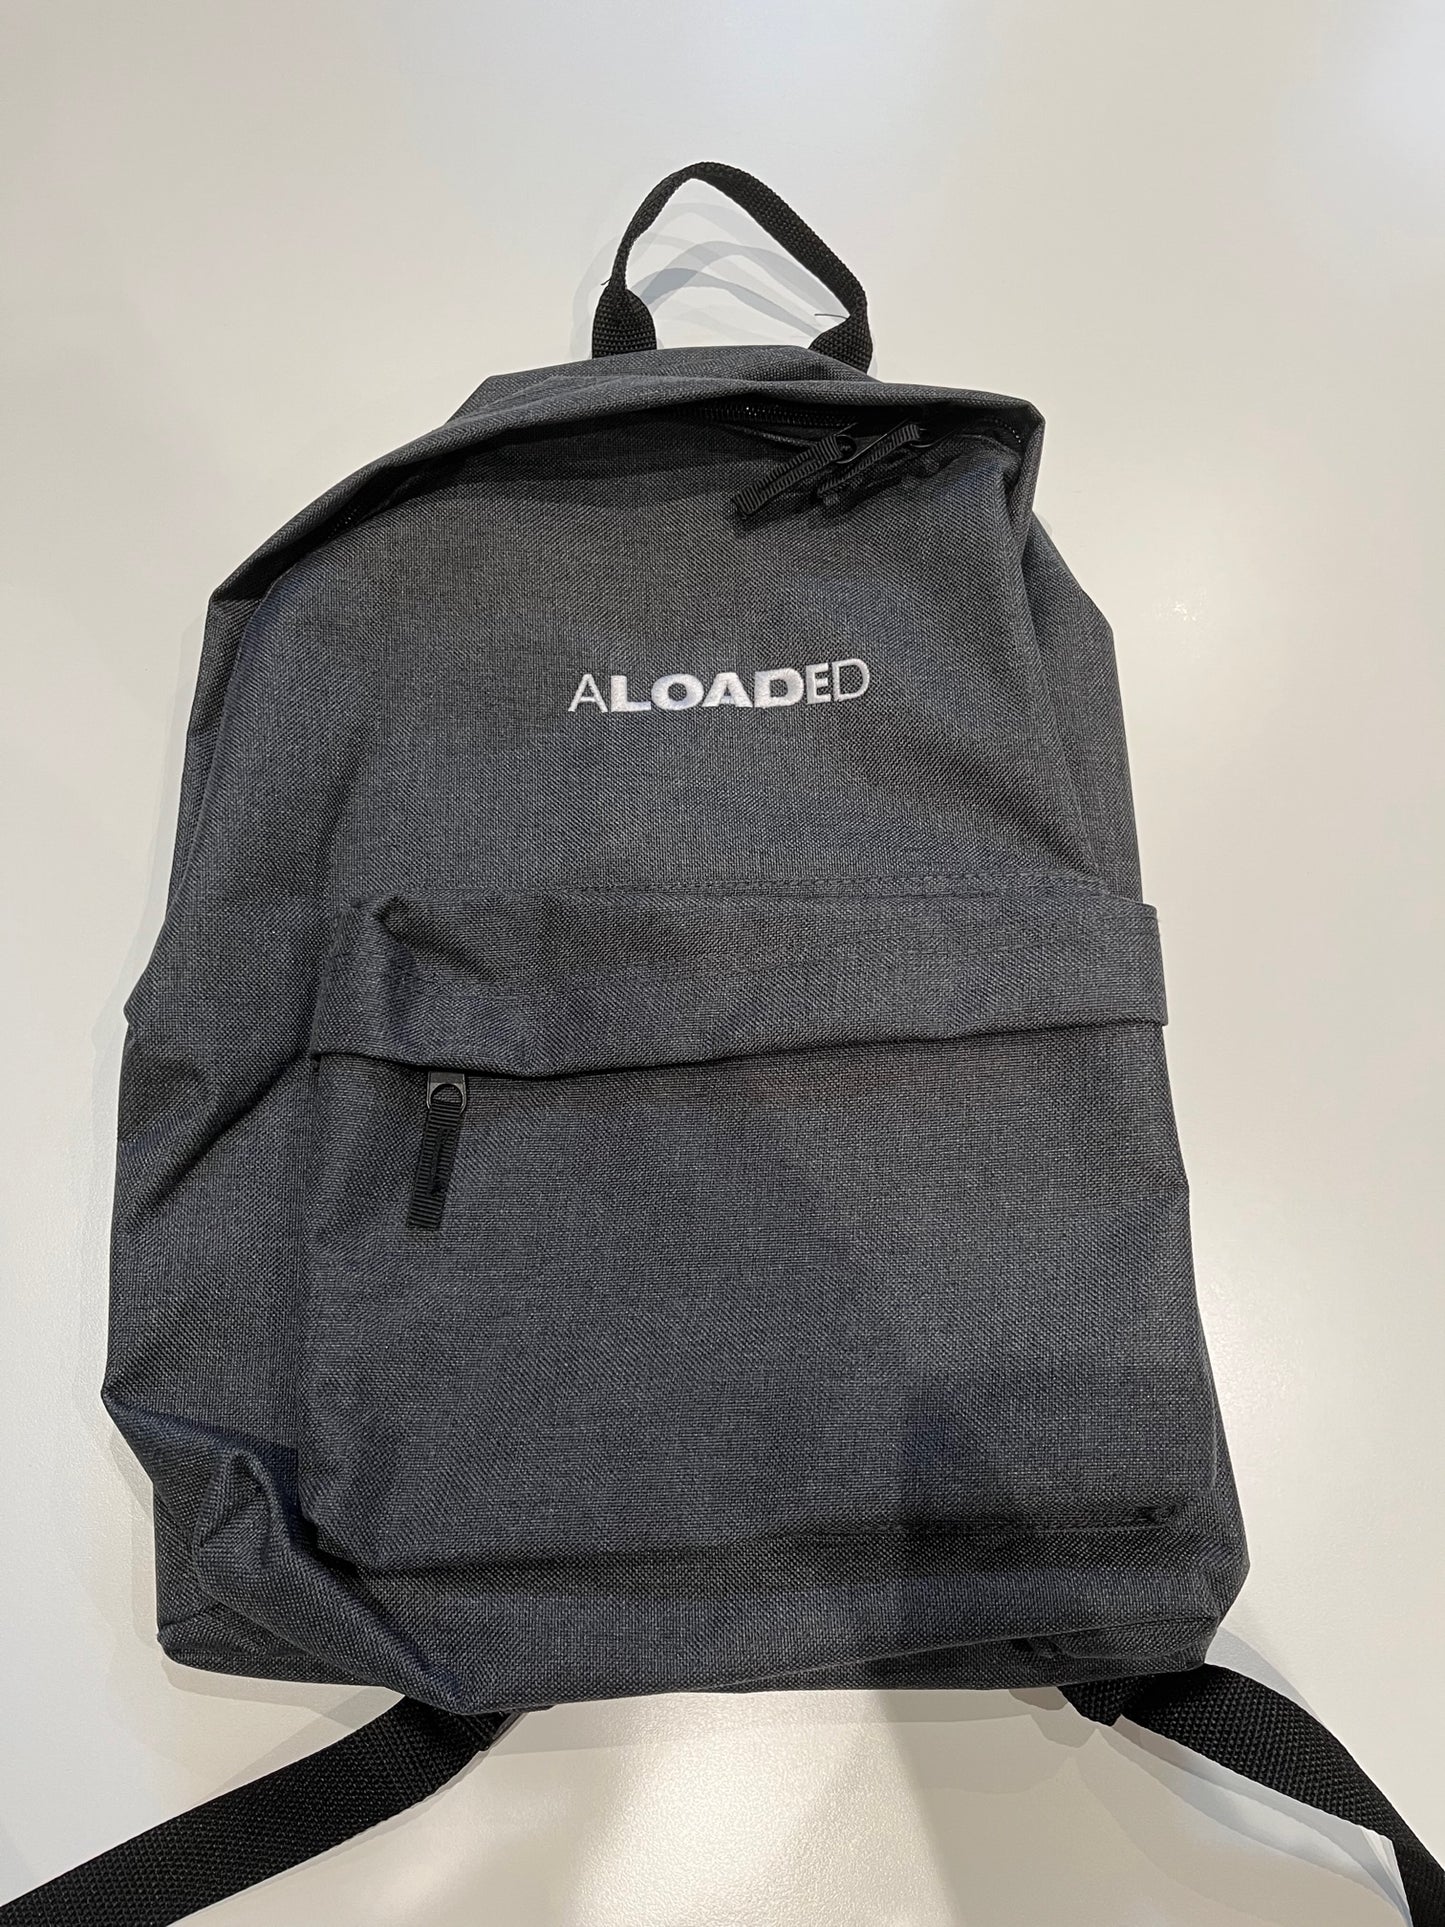 ALOADED Embroidered Backpack